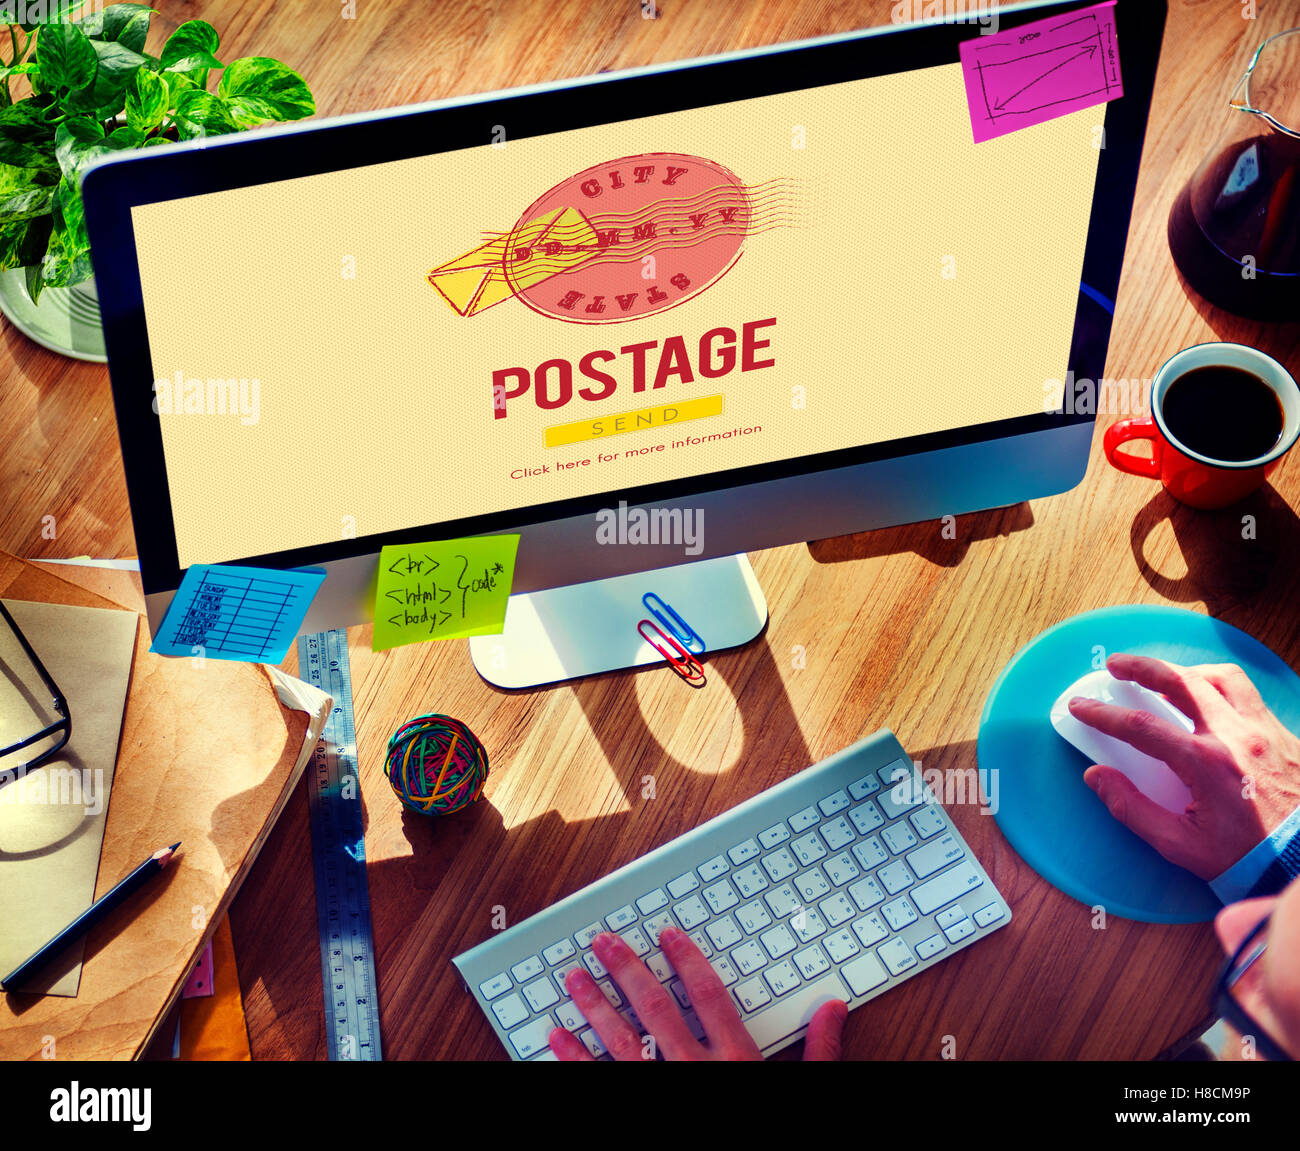 Postage Postal Stamp Delivery Postmark Concept Stock Photo